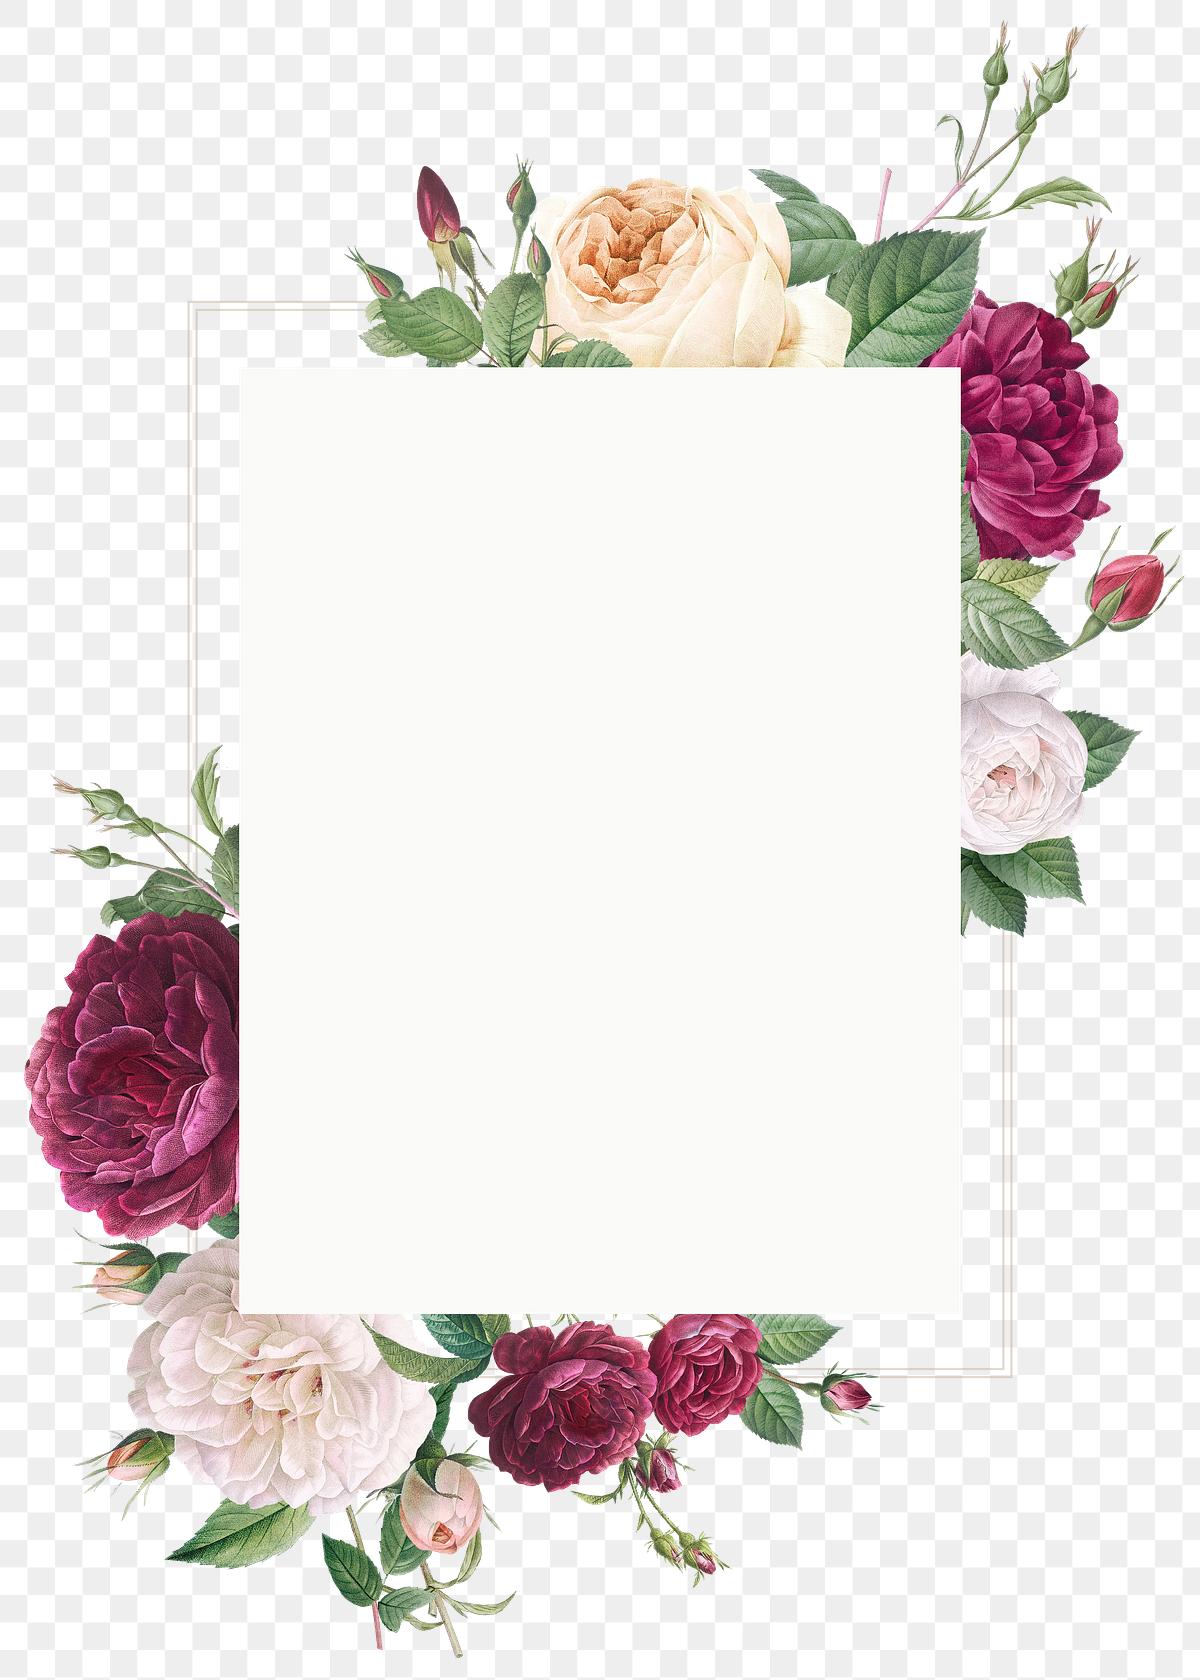 Floral design wedding invitation mockup | Royalty free ...